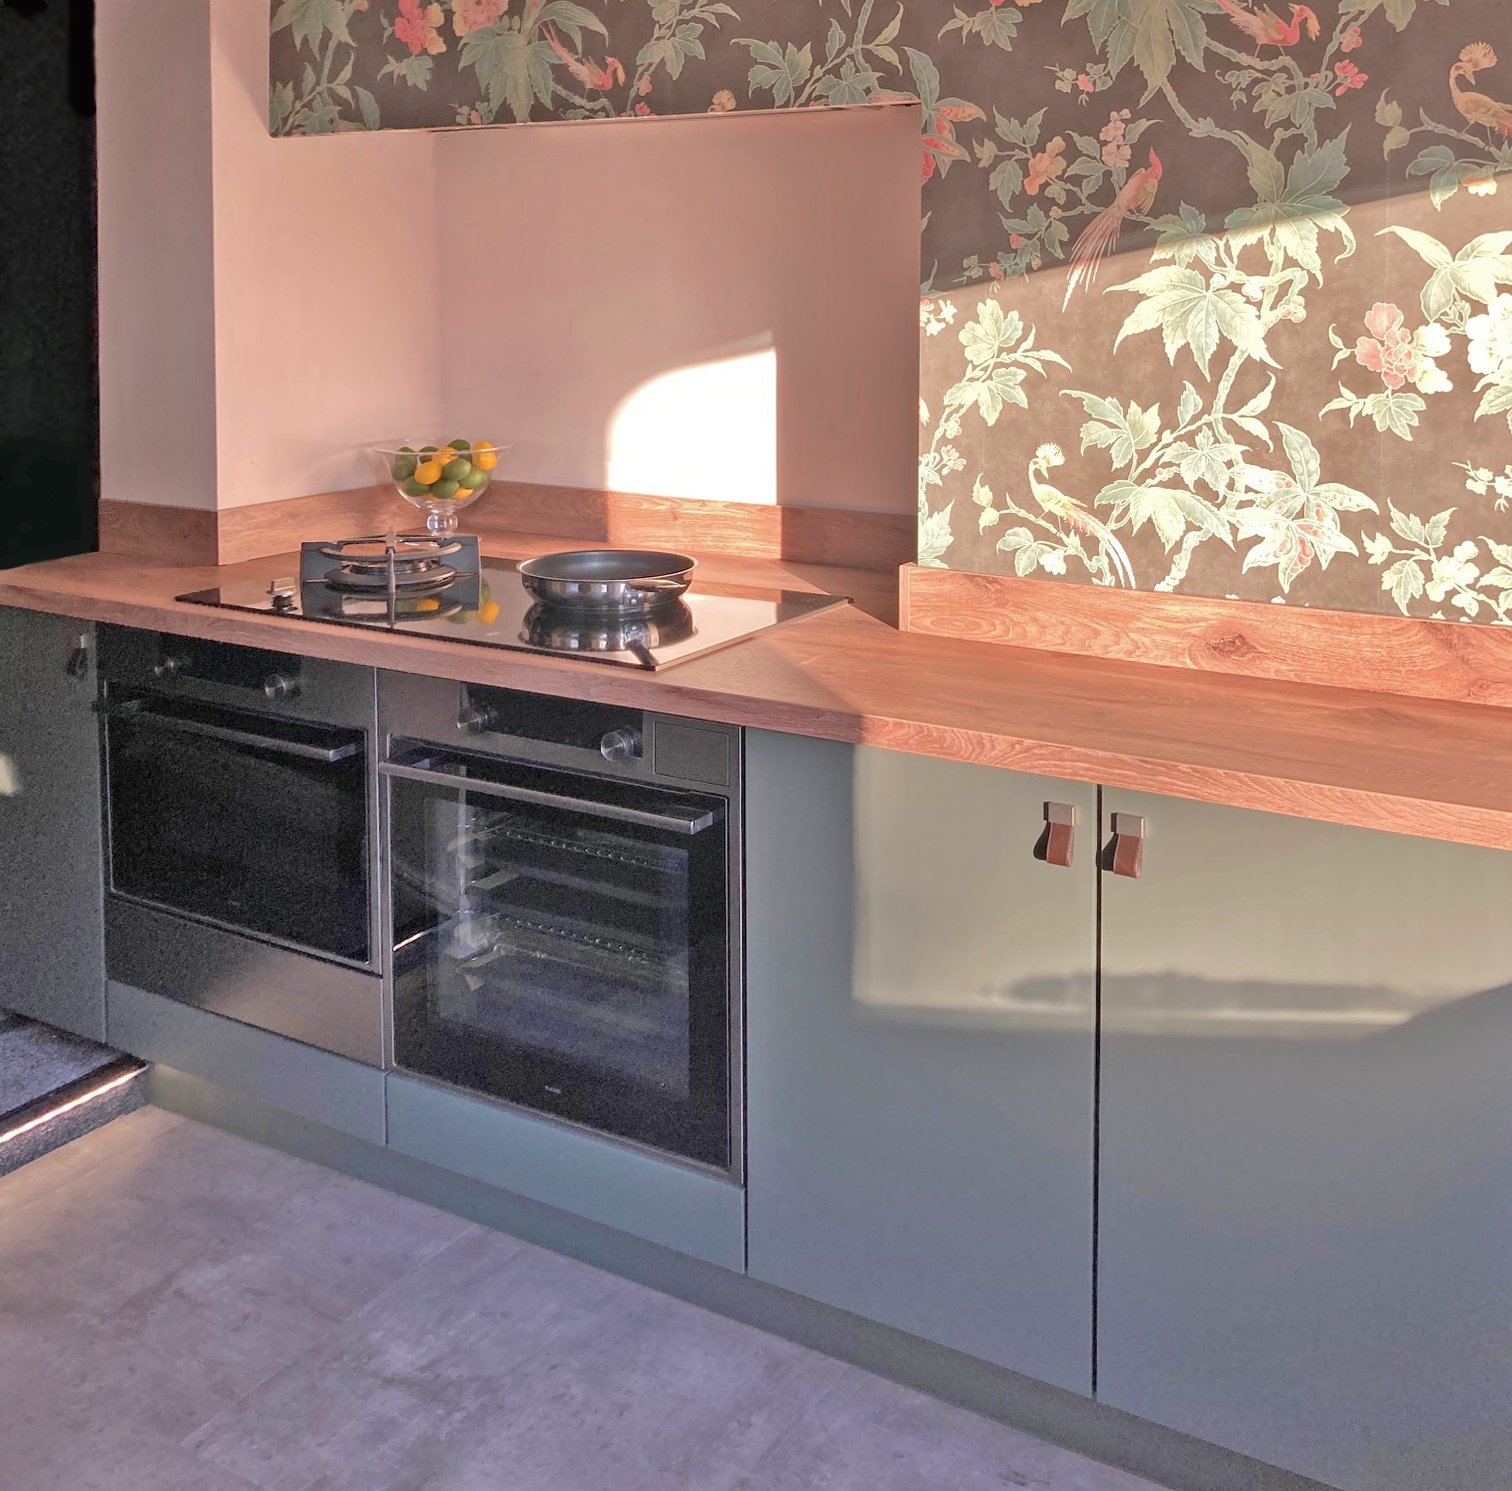 Codsall Kitchen Studio - New Display 6.jpg